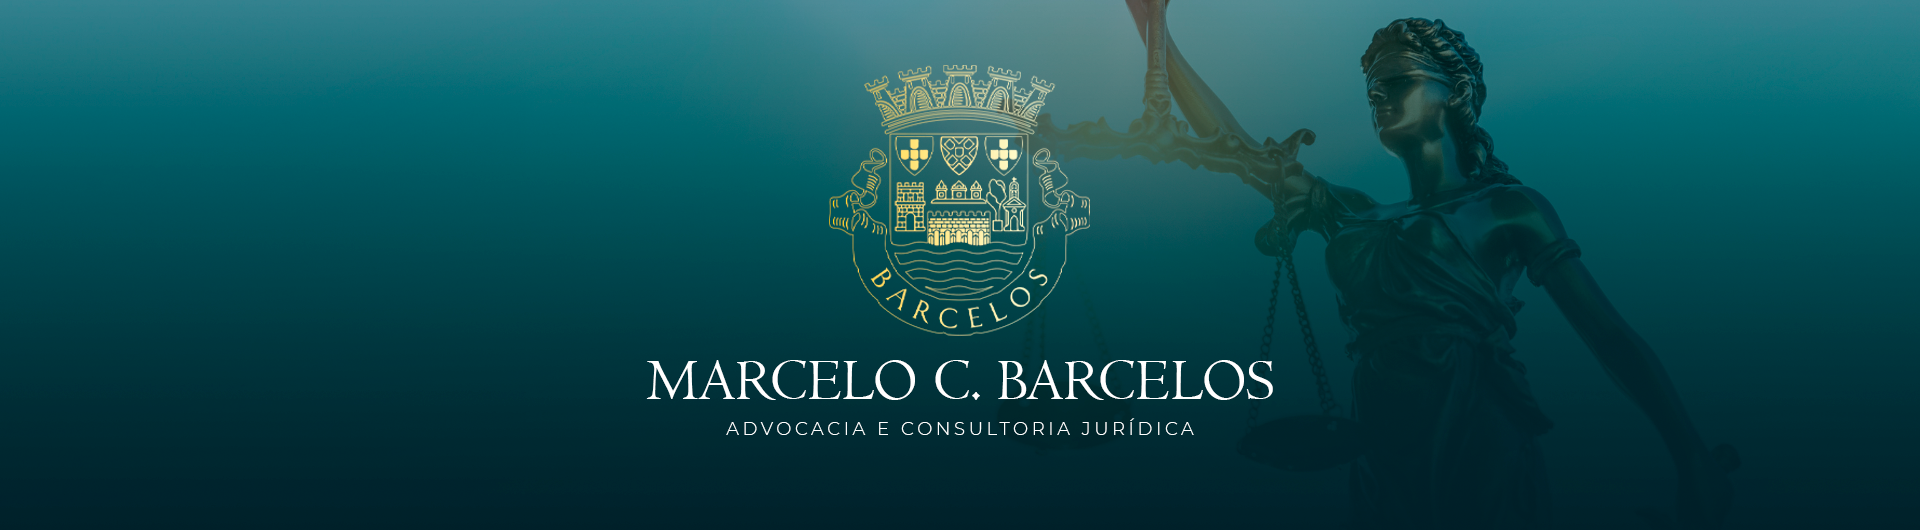 Marcelo Barcelos Advocacia - 